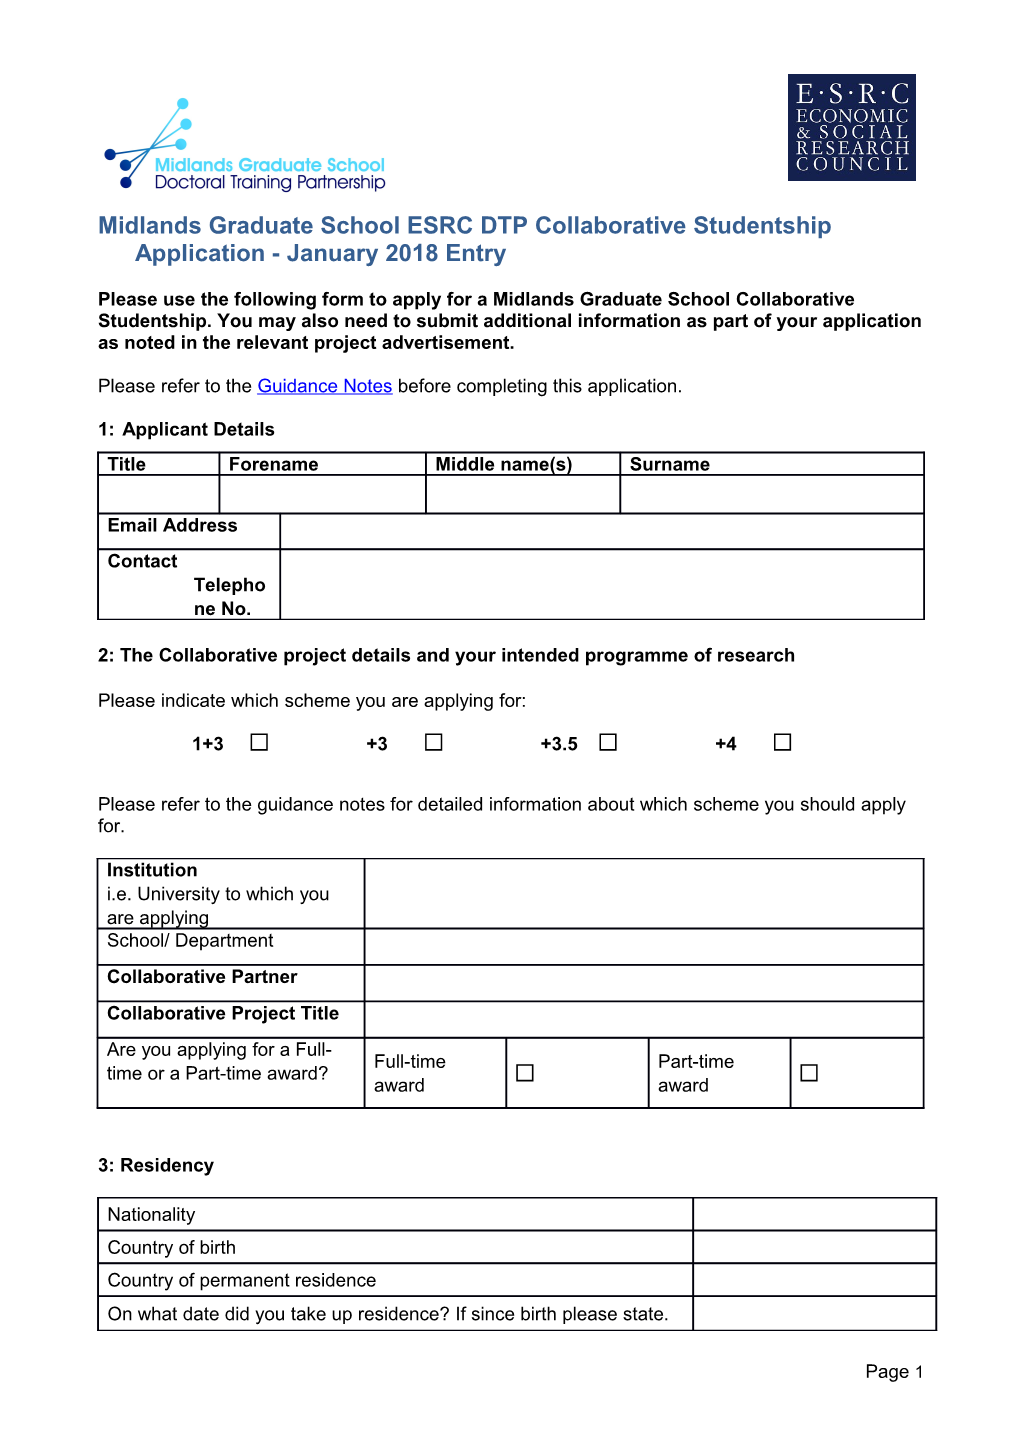 Midlands Graduate School ESRC DTP Collaborative Studentship Application - January 2018 Entry